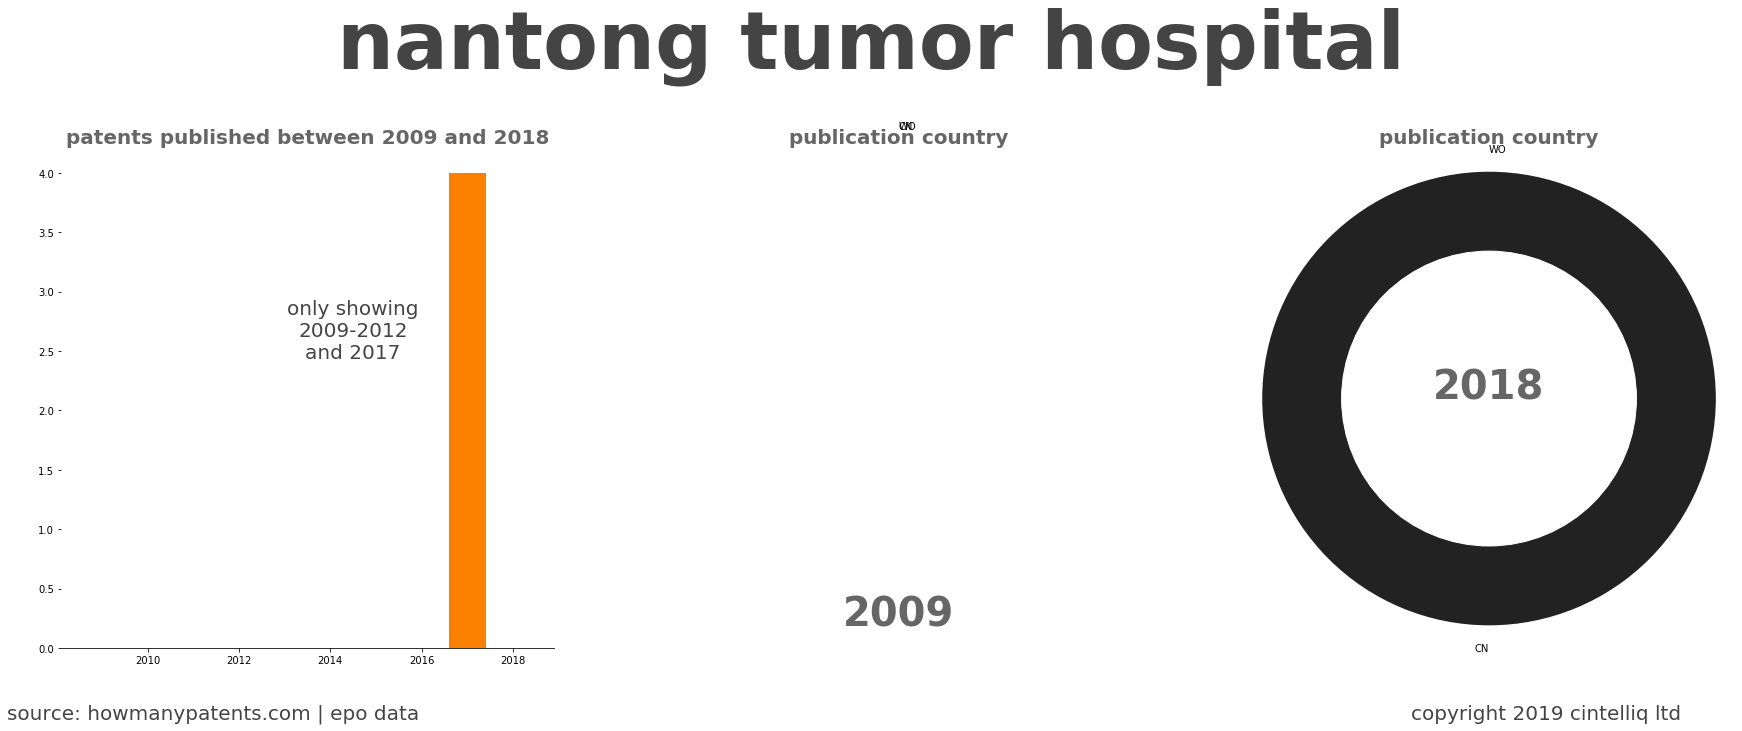 summary of patents for Nantong Tumor Hospital